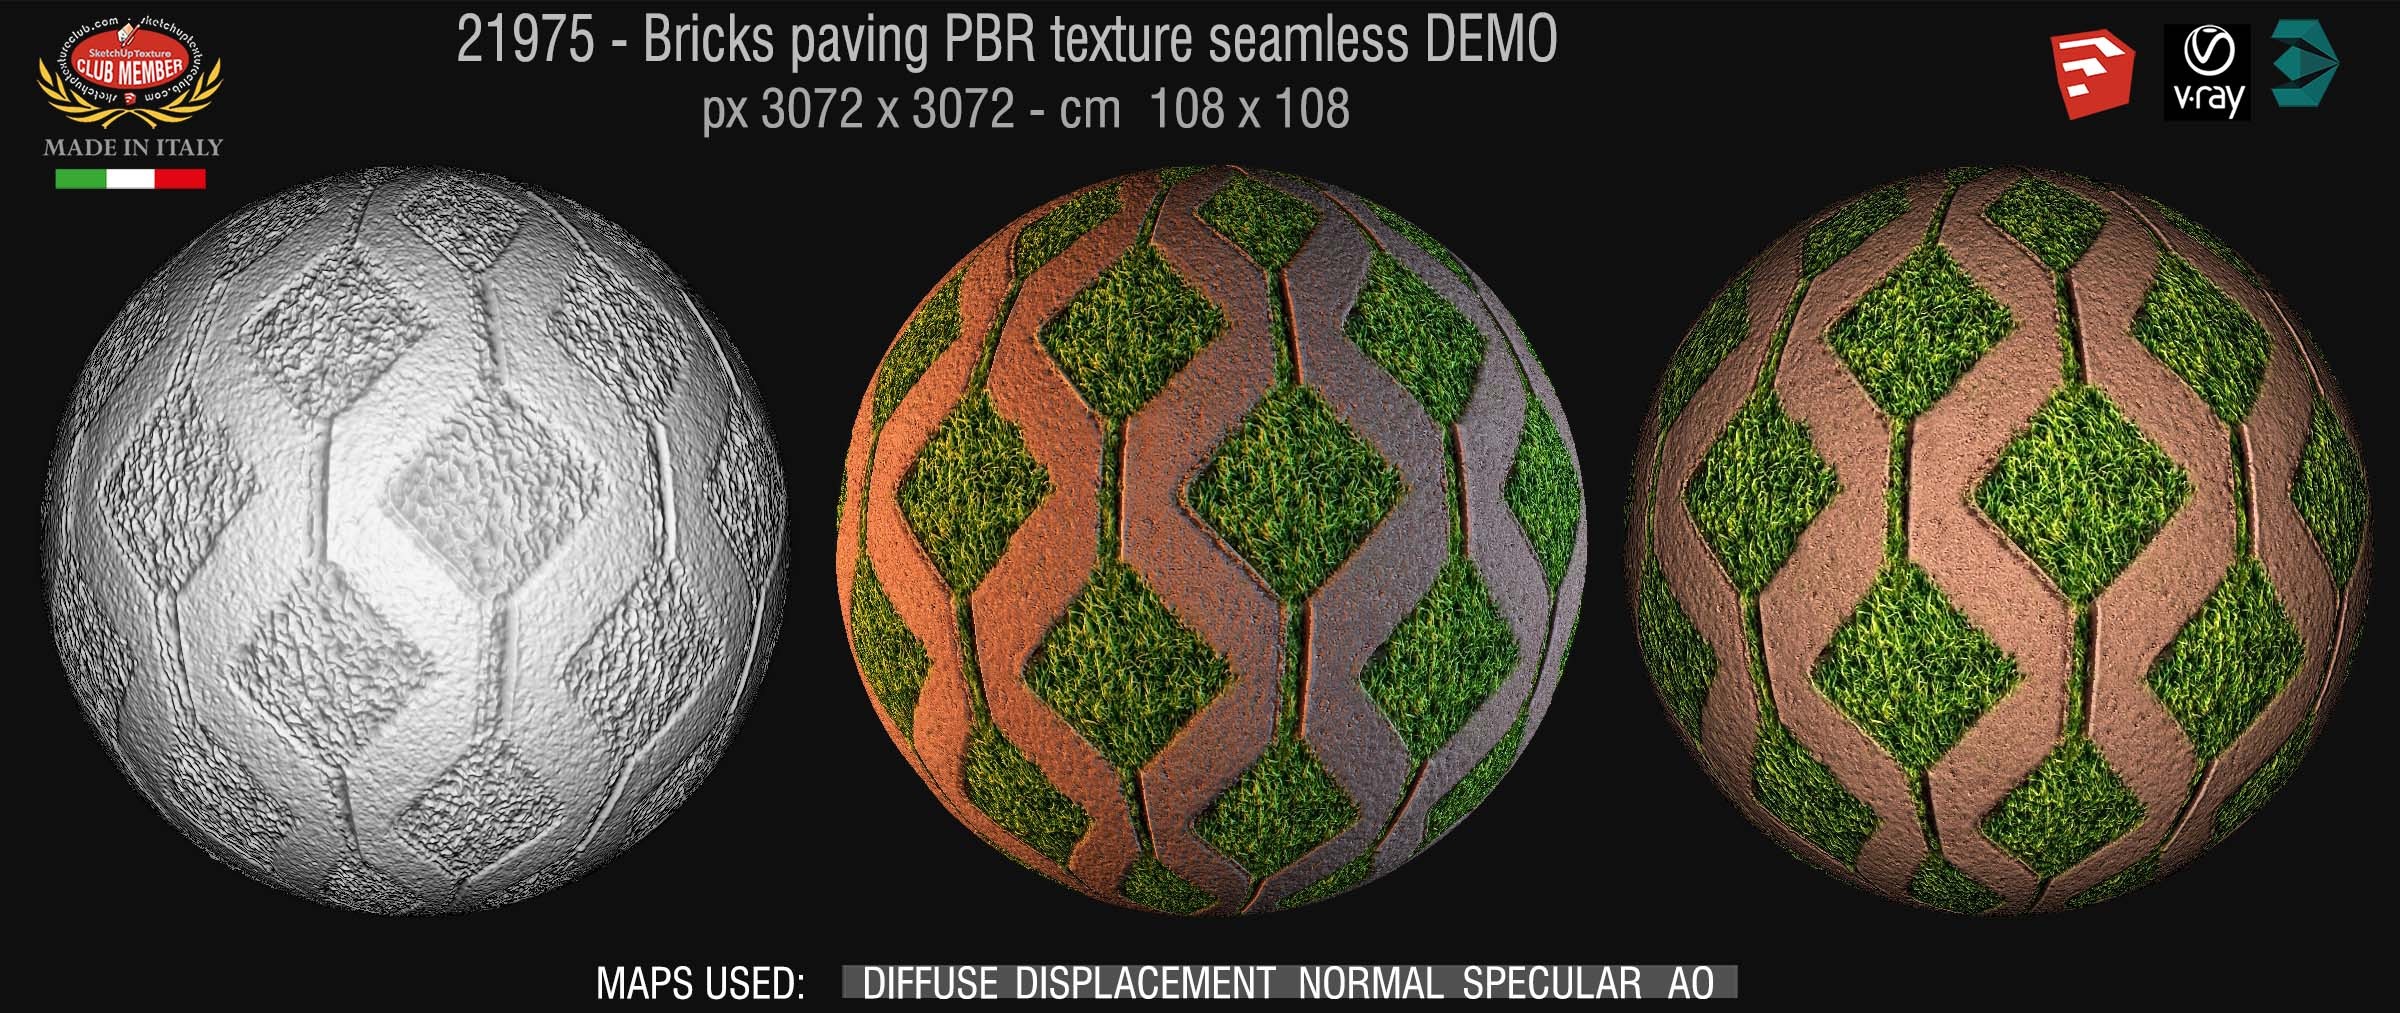 21975 bricks paving PBR texture seamless DEMO